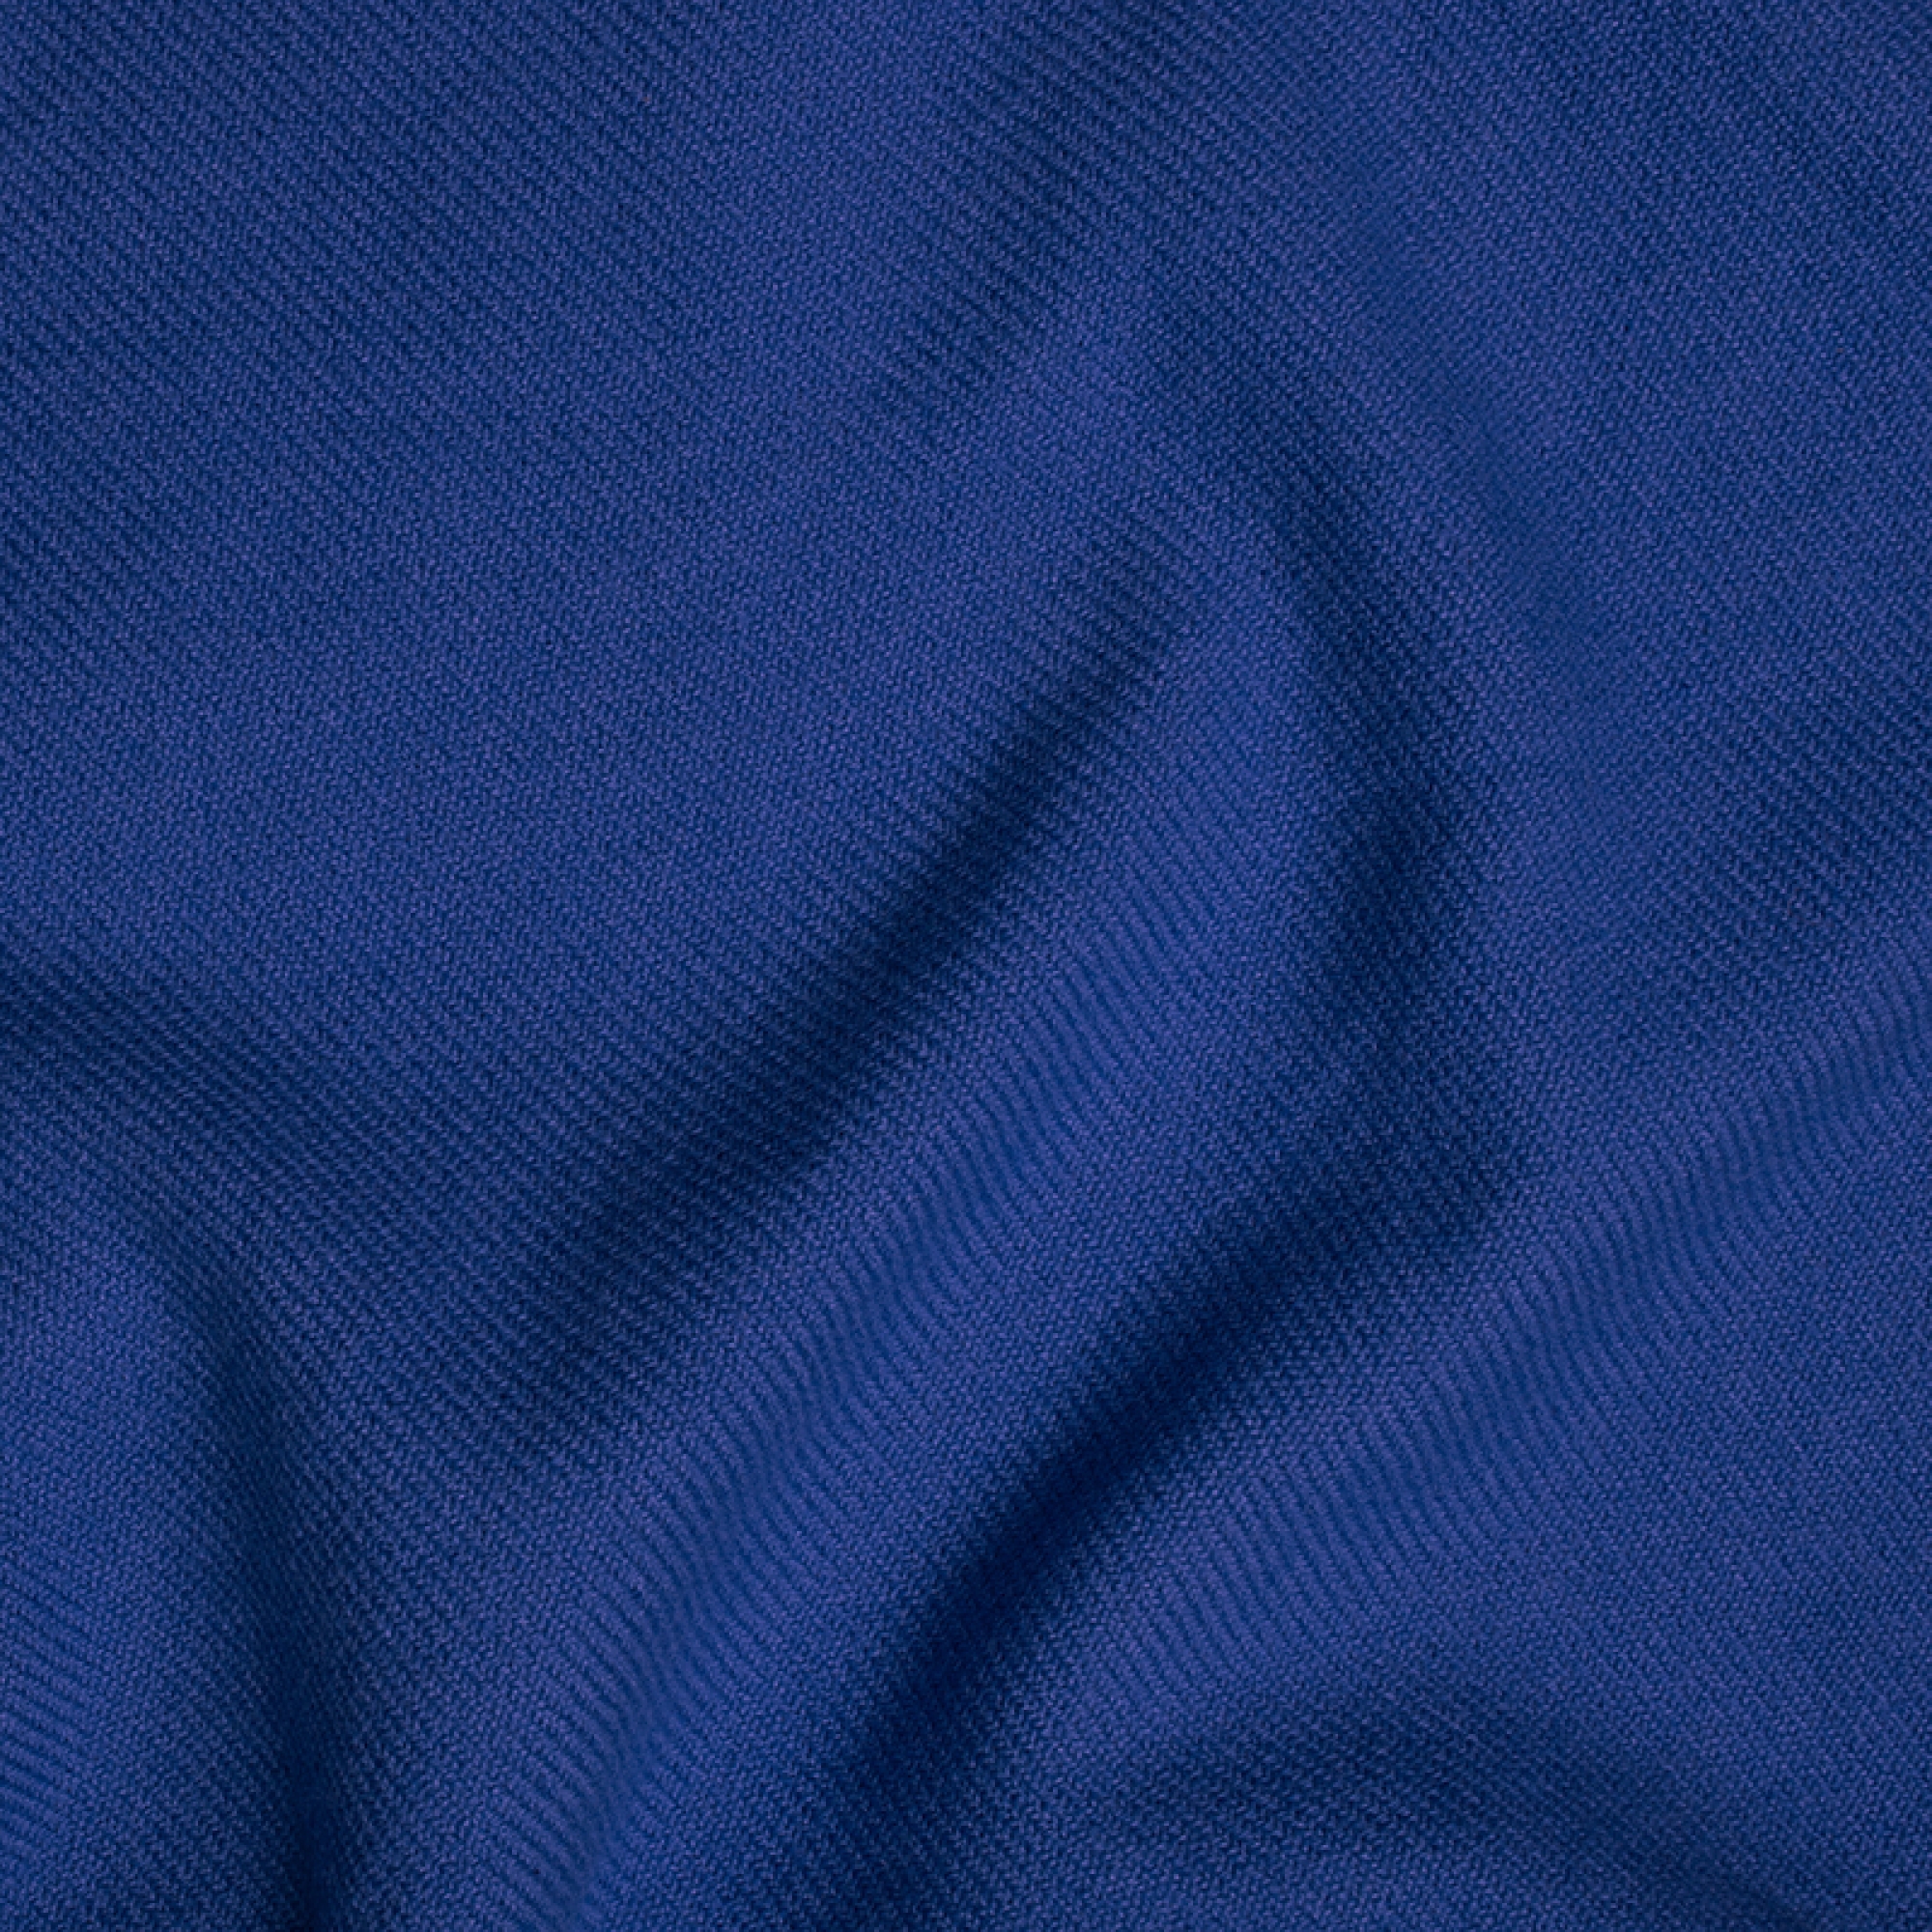 Cashmere accessories cocooning toodoo plain l 220 x 220 light cobalt blue 220x220cm